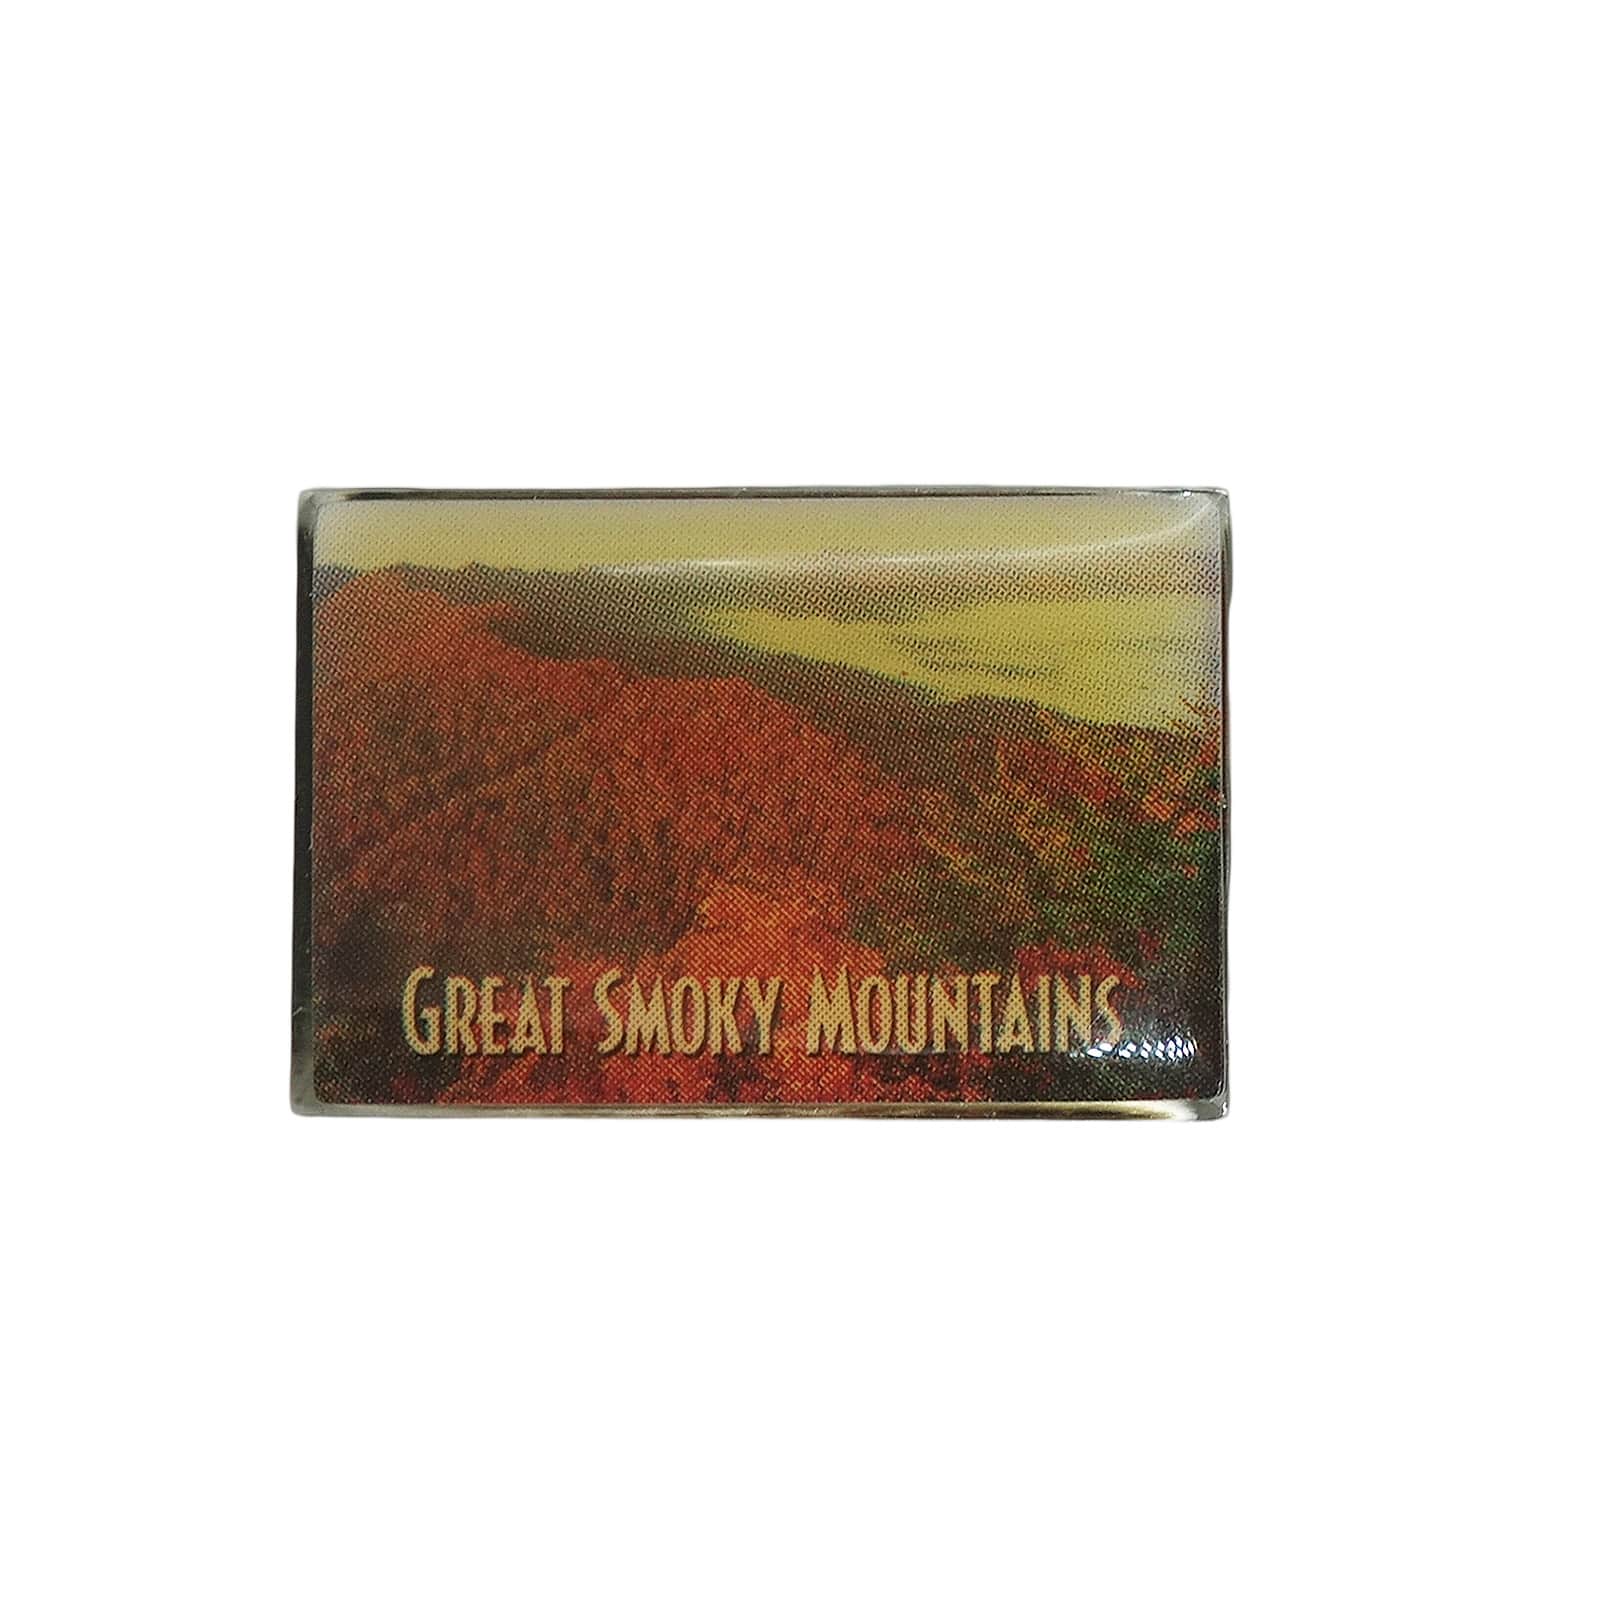 GREAT SMOKY MOUNTAINS ピンズ グレートスモーキー山脈 留め具付き